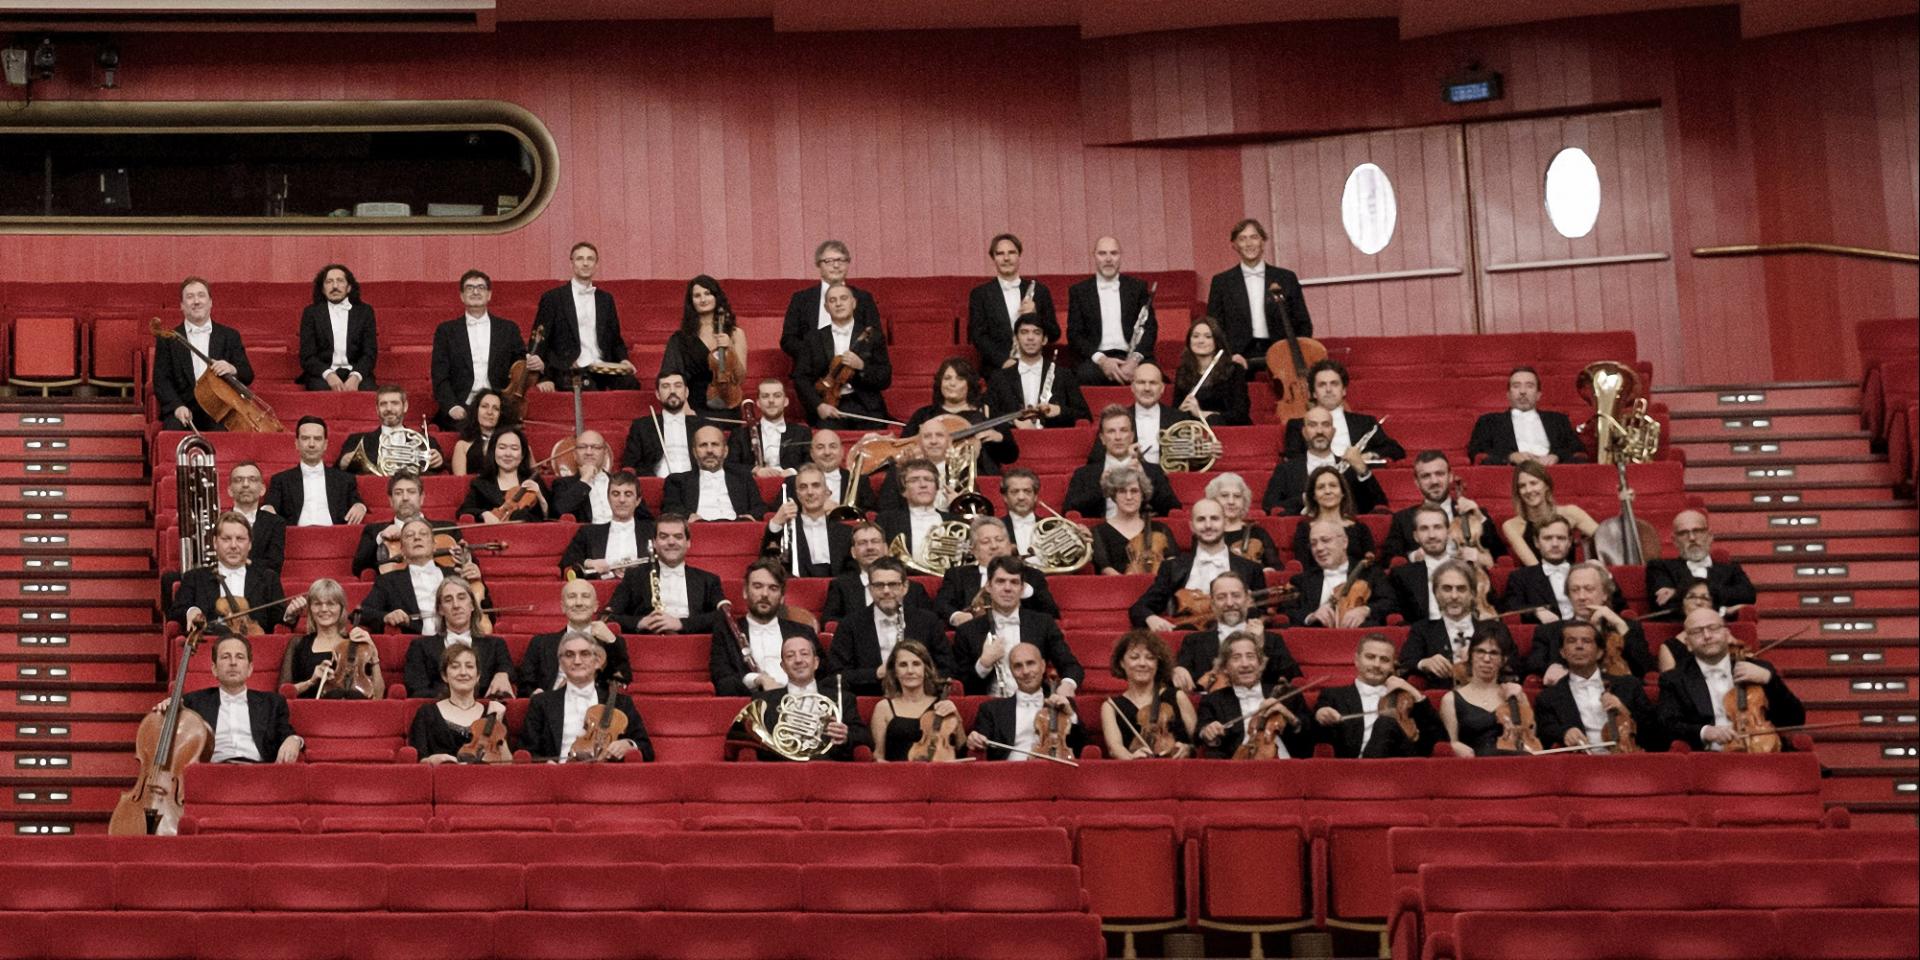 The Orchestra Teatro Regio Torino (ph Edorardo Piva)